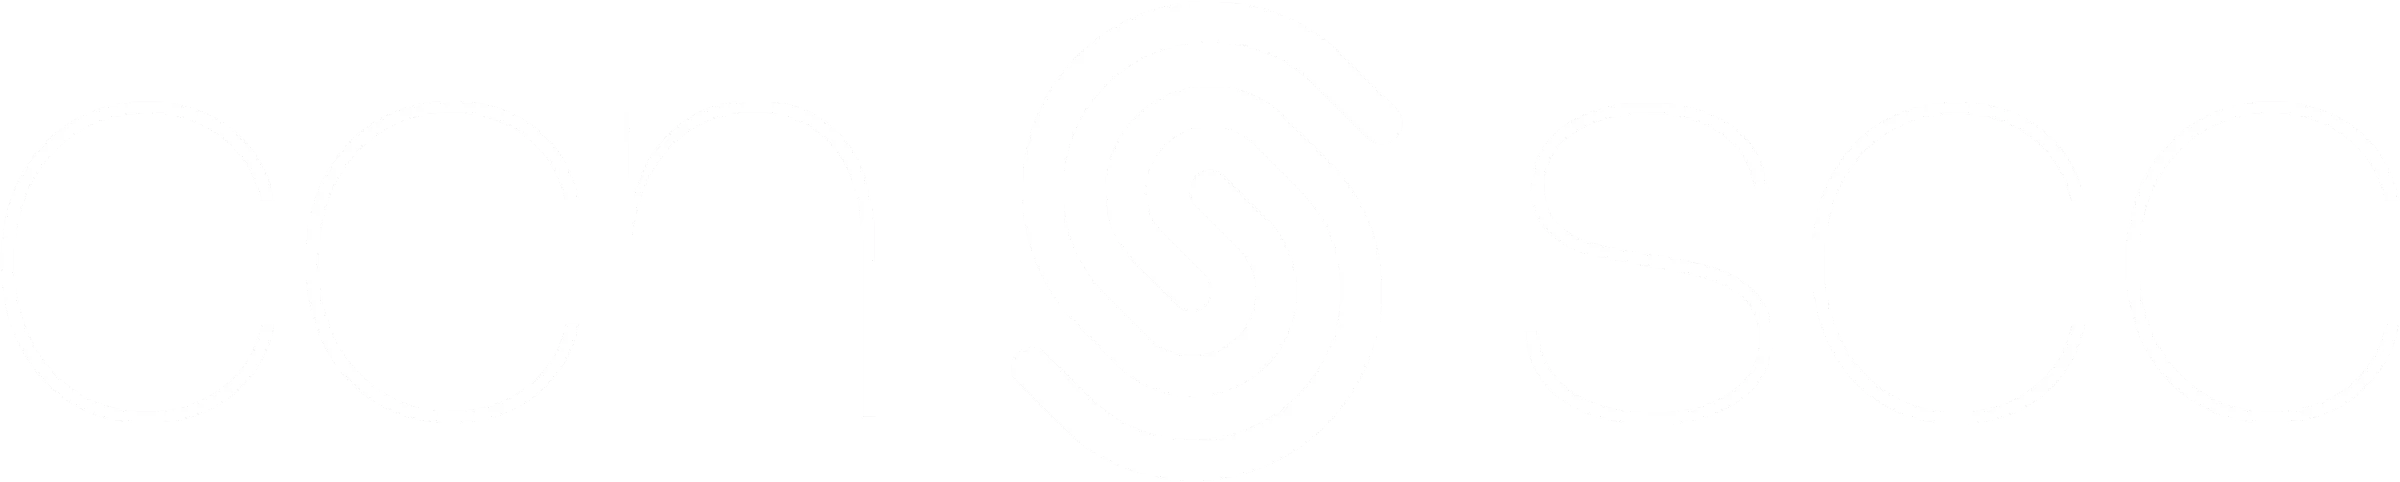 Standards Council (logo)